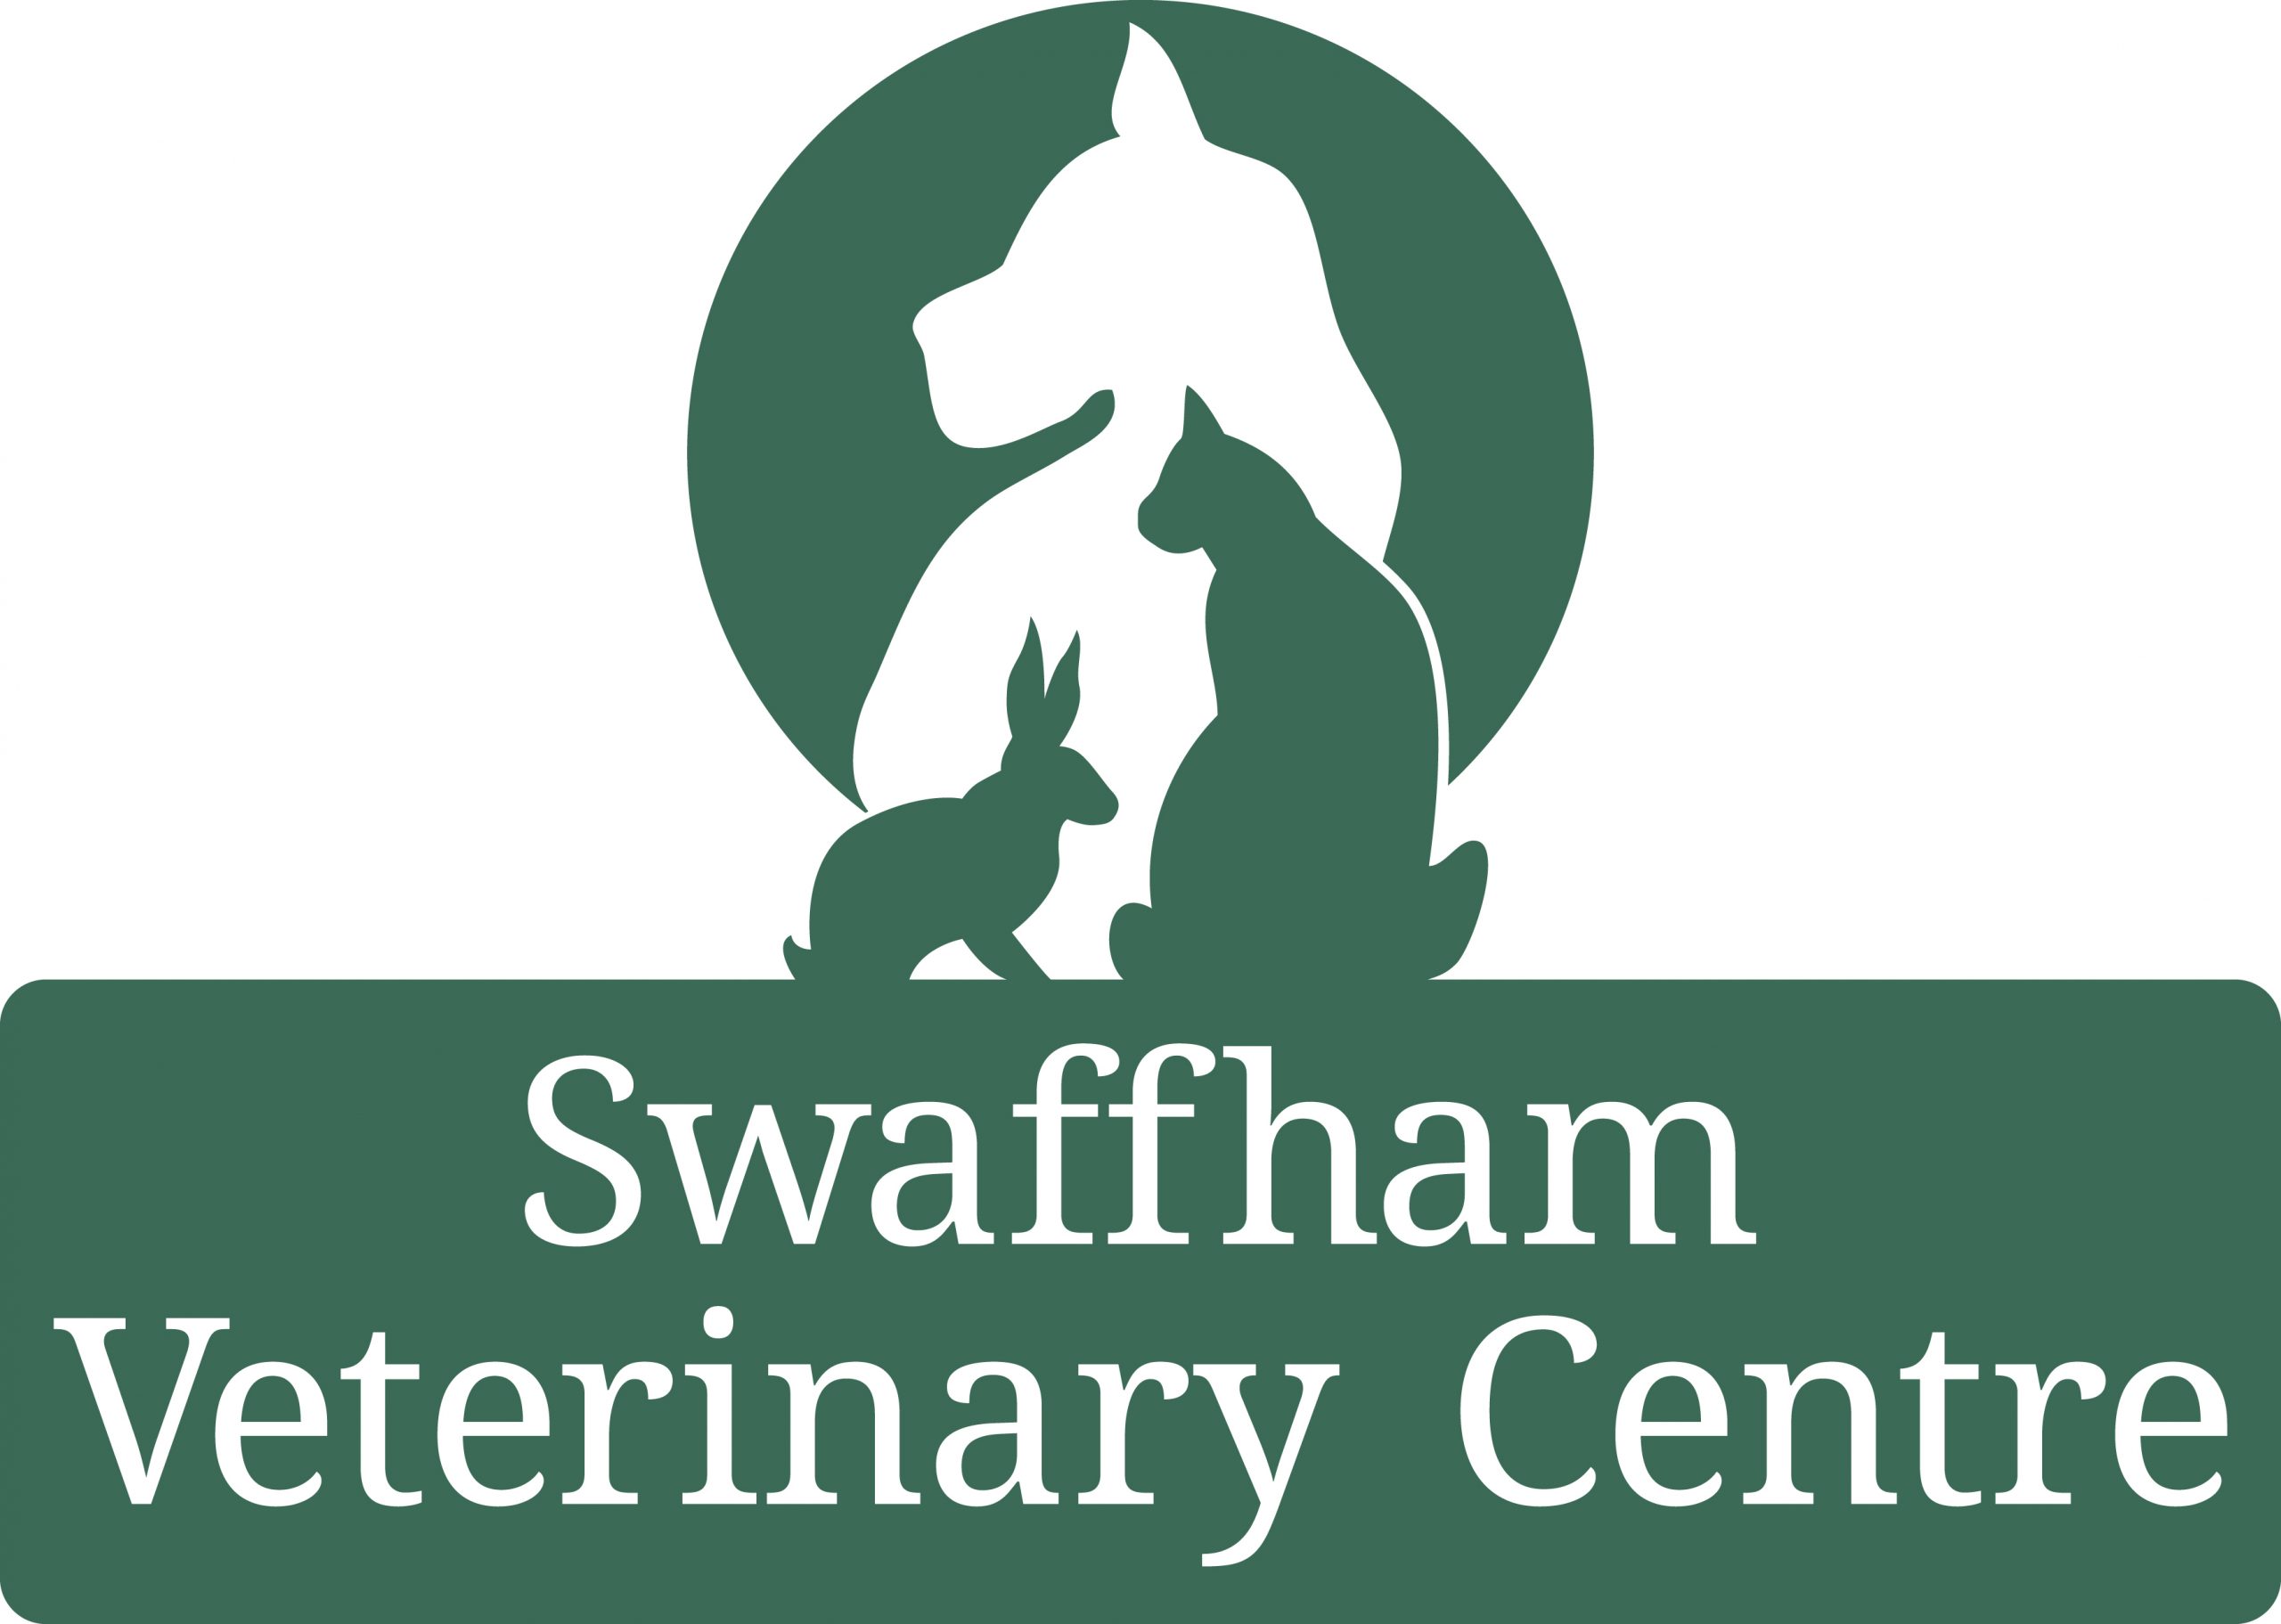 Swaffham Veterinary Centre